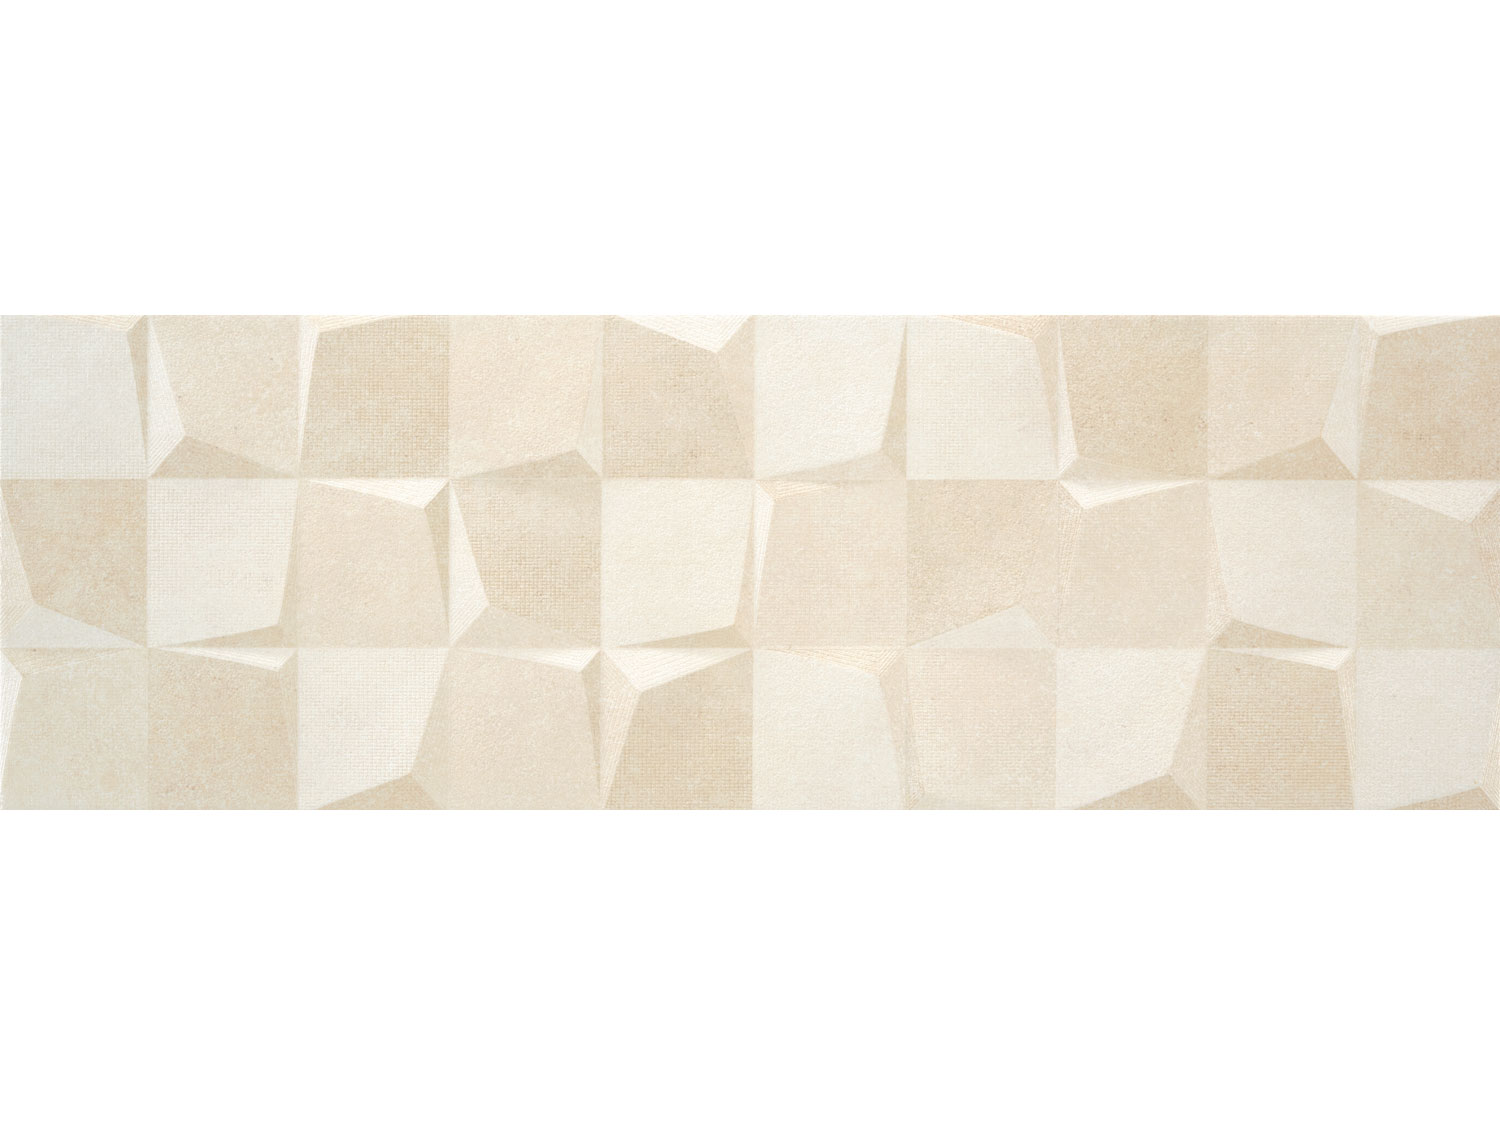 Accord Pi Warm Mt Ceramic Wall Decor Tile